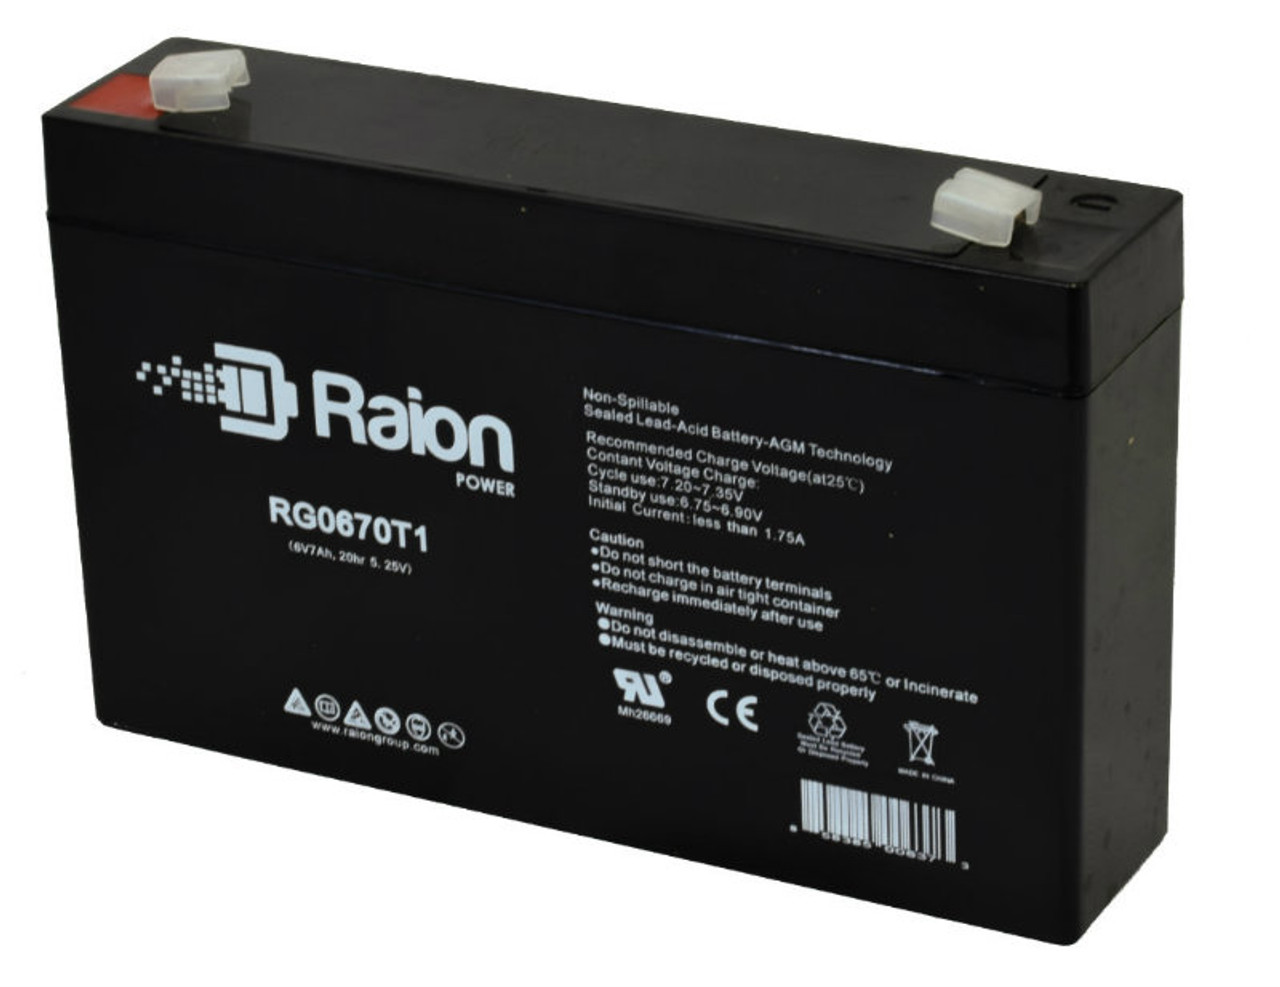 Raion Power RG0670T1 6V 7Ah Replacement Battery Cartridge for IMED PC1 GEMINI Medical Equipment